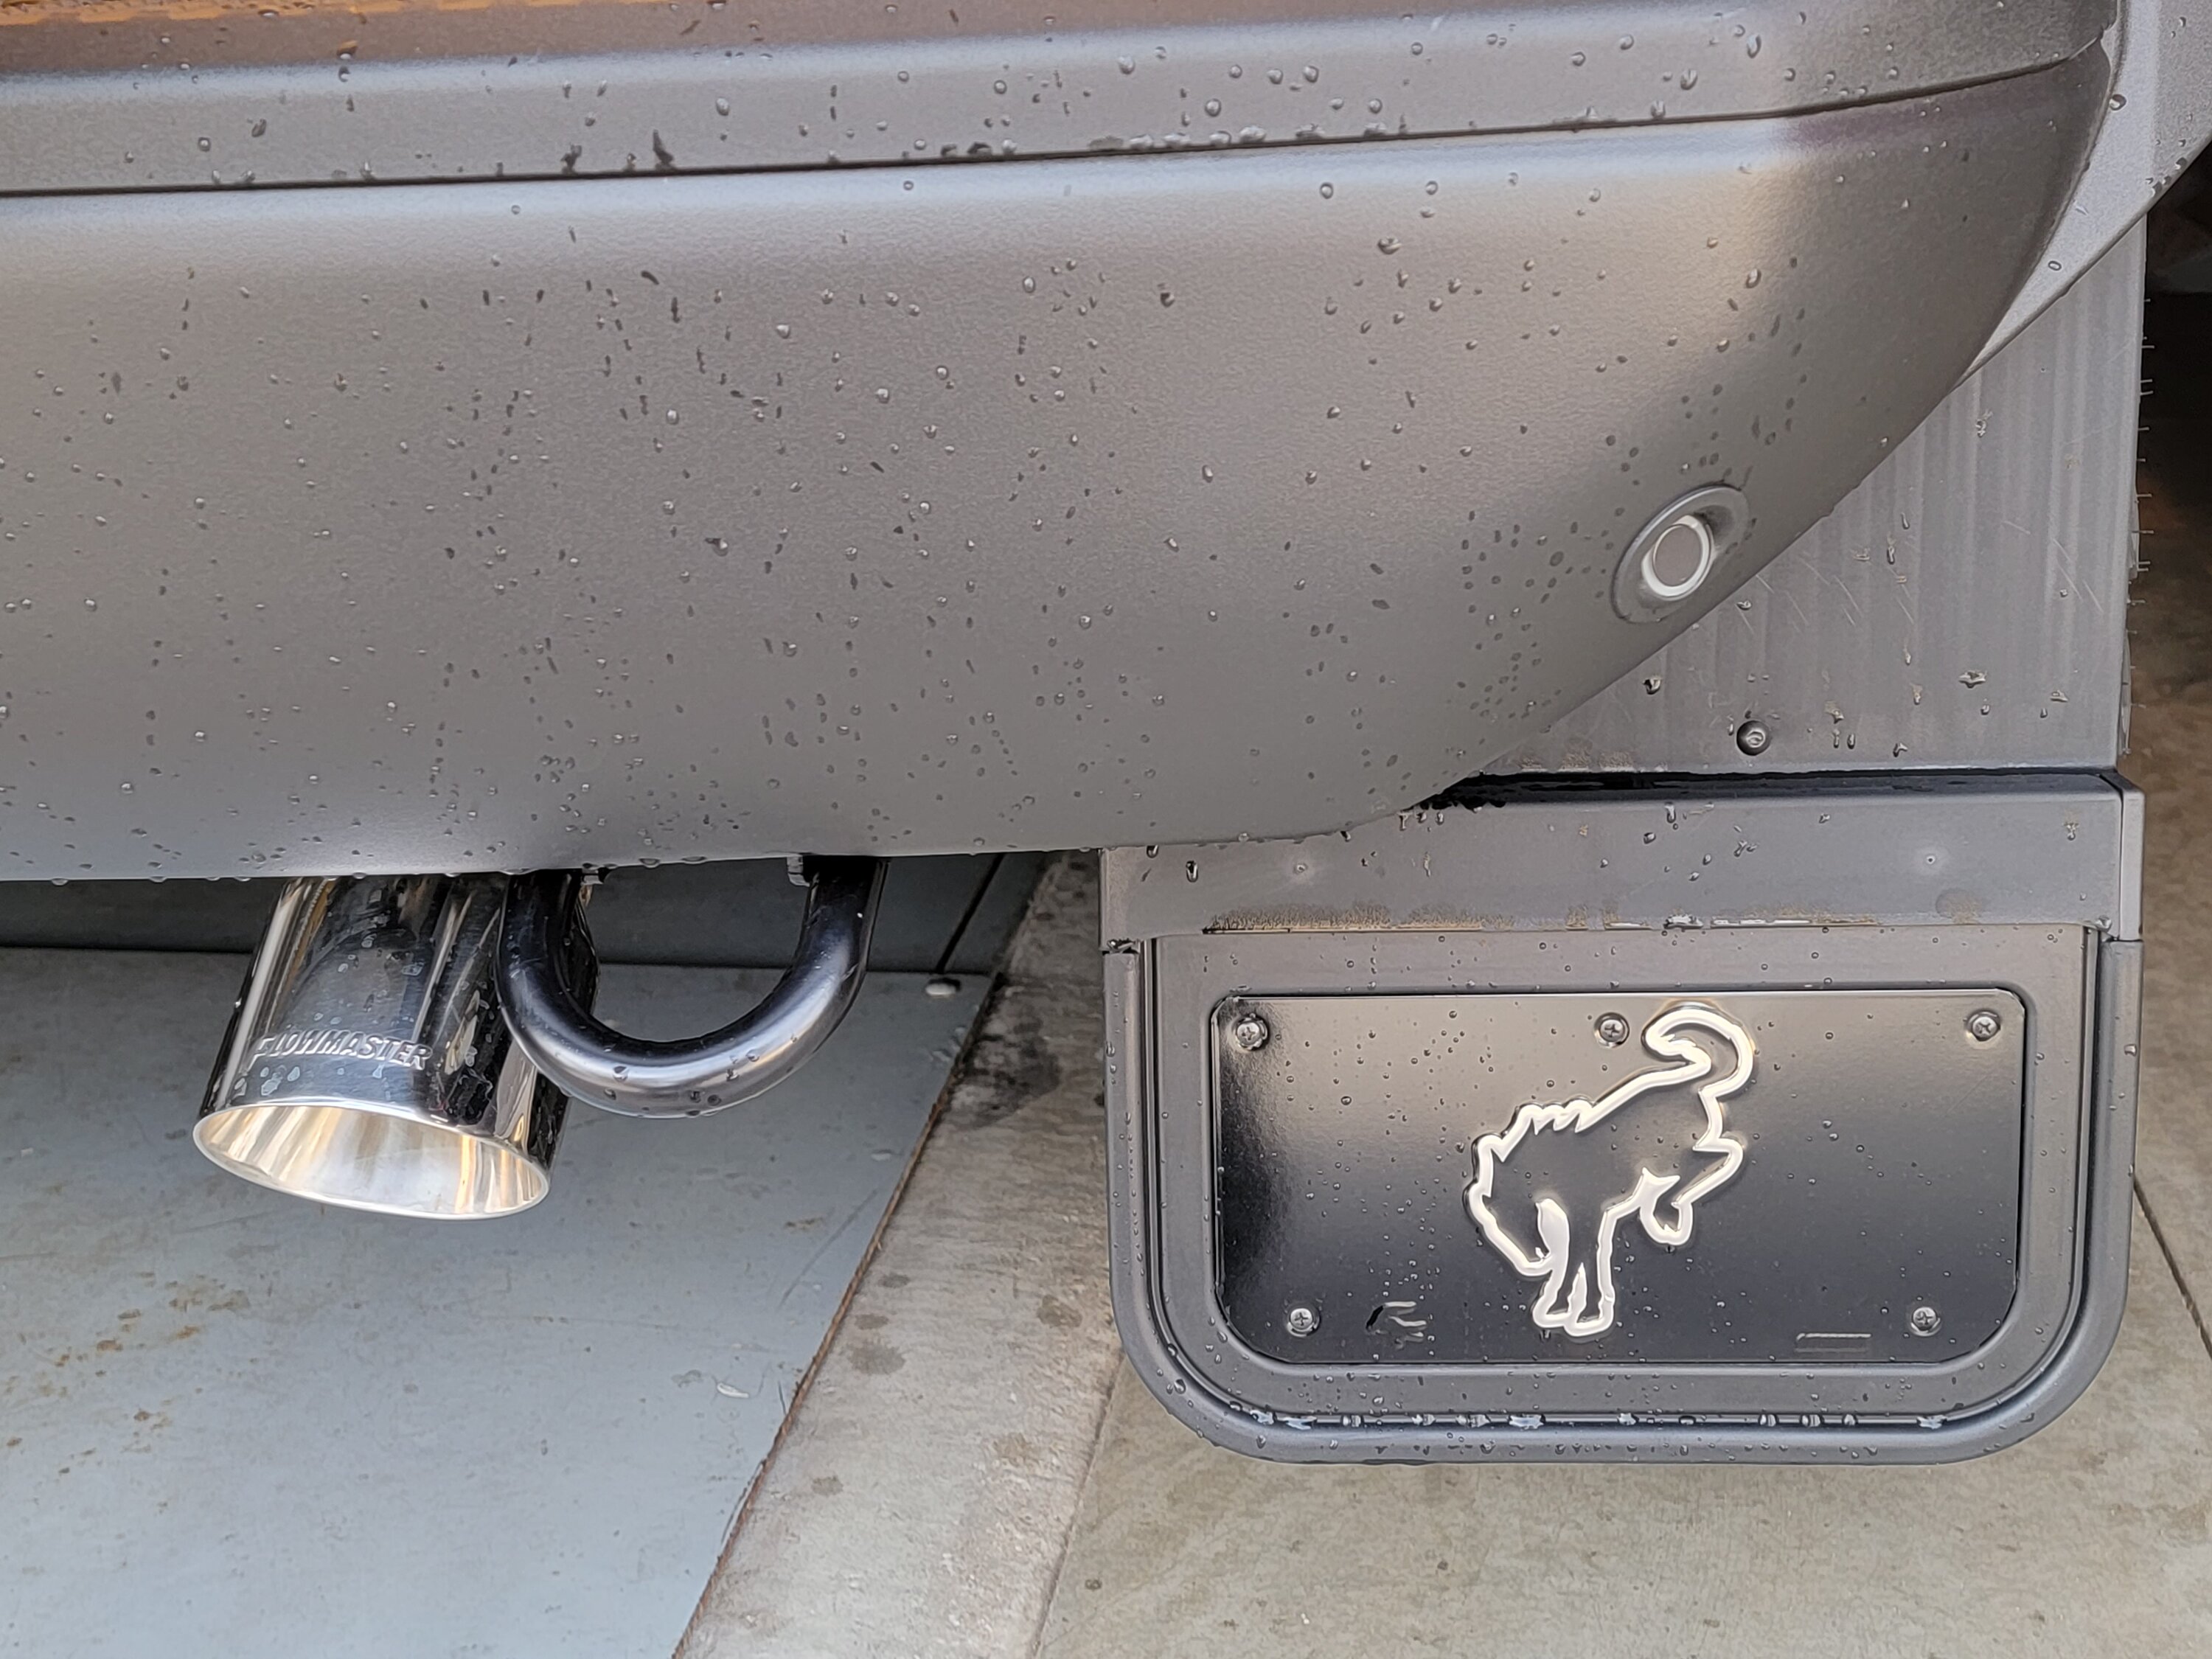 Ford Bronco Mud Flaps: RokBlokz vs RekGen vs Mabett vs WeatherTech ? 20211230_133725